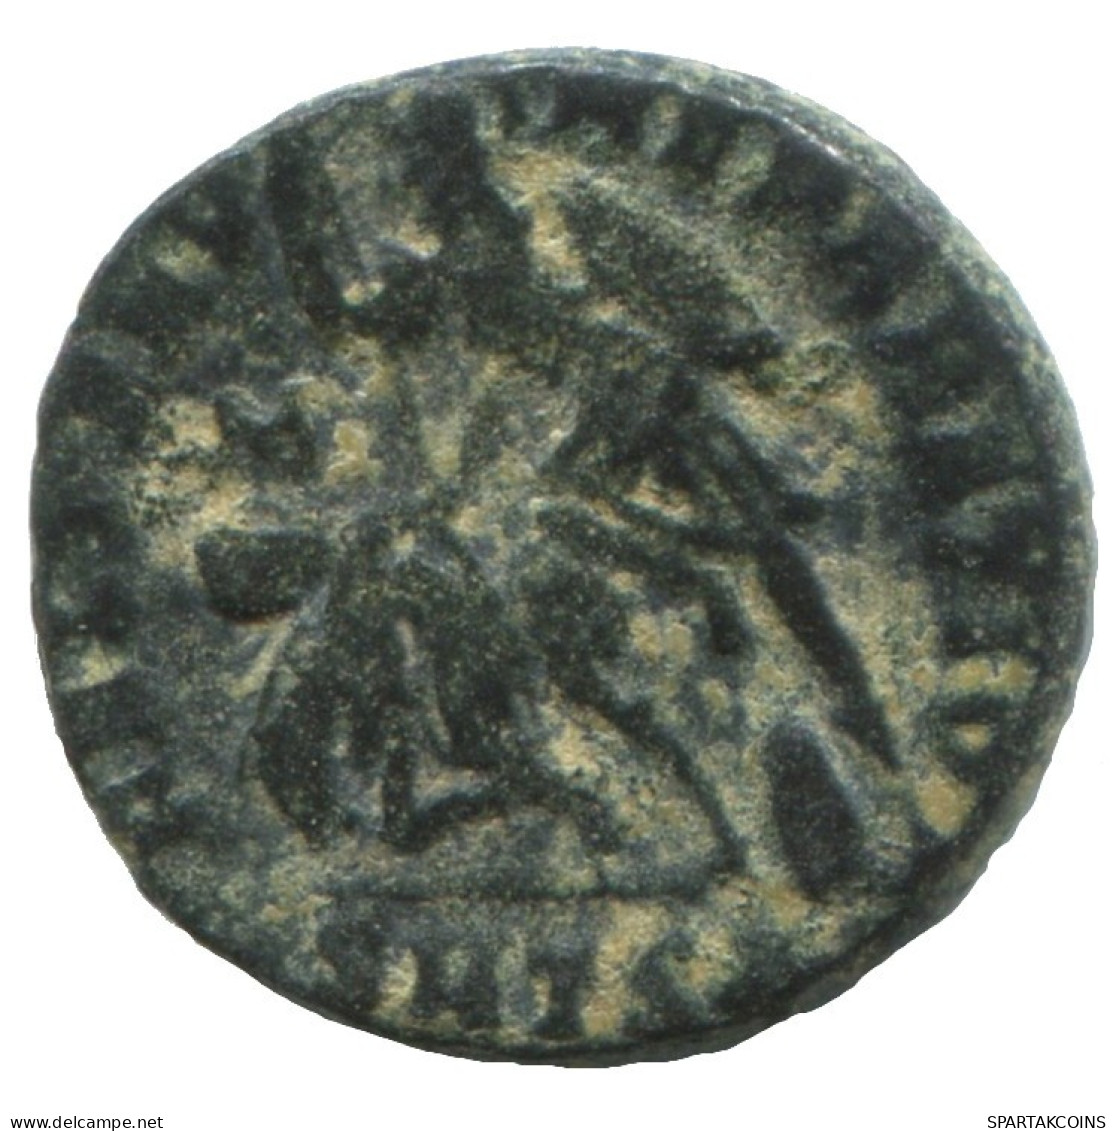 CONSTANTIUS II THESSALONICA SMTS AD348 FEL TEMP REPARATIO 2.4g/16m #ANN1214.9.U.A - El Imperio Christiano (307 / 363)